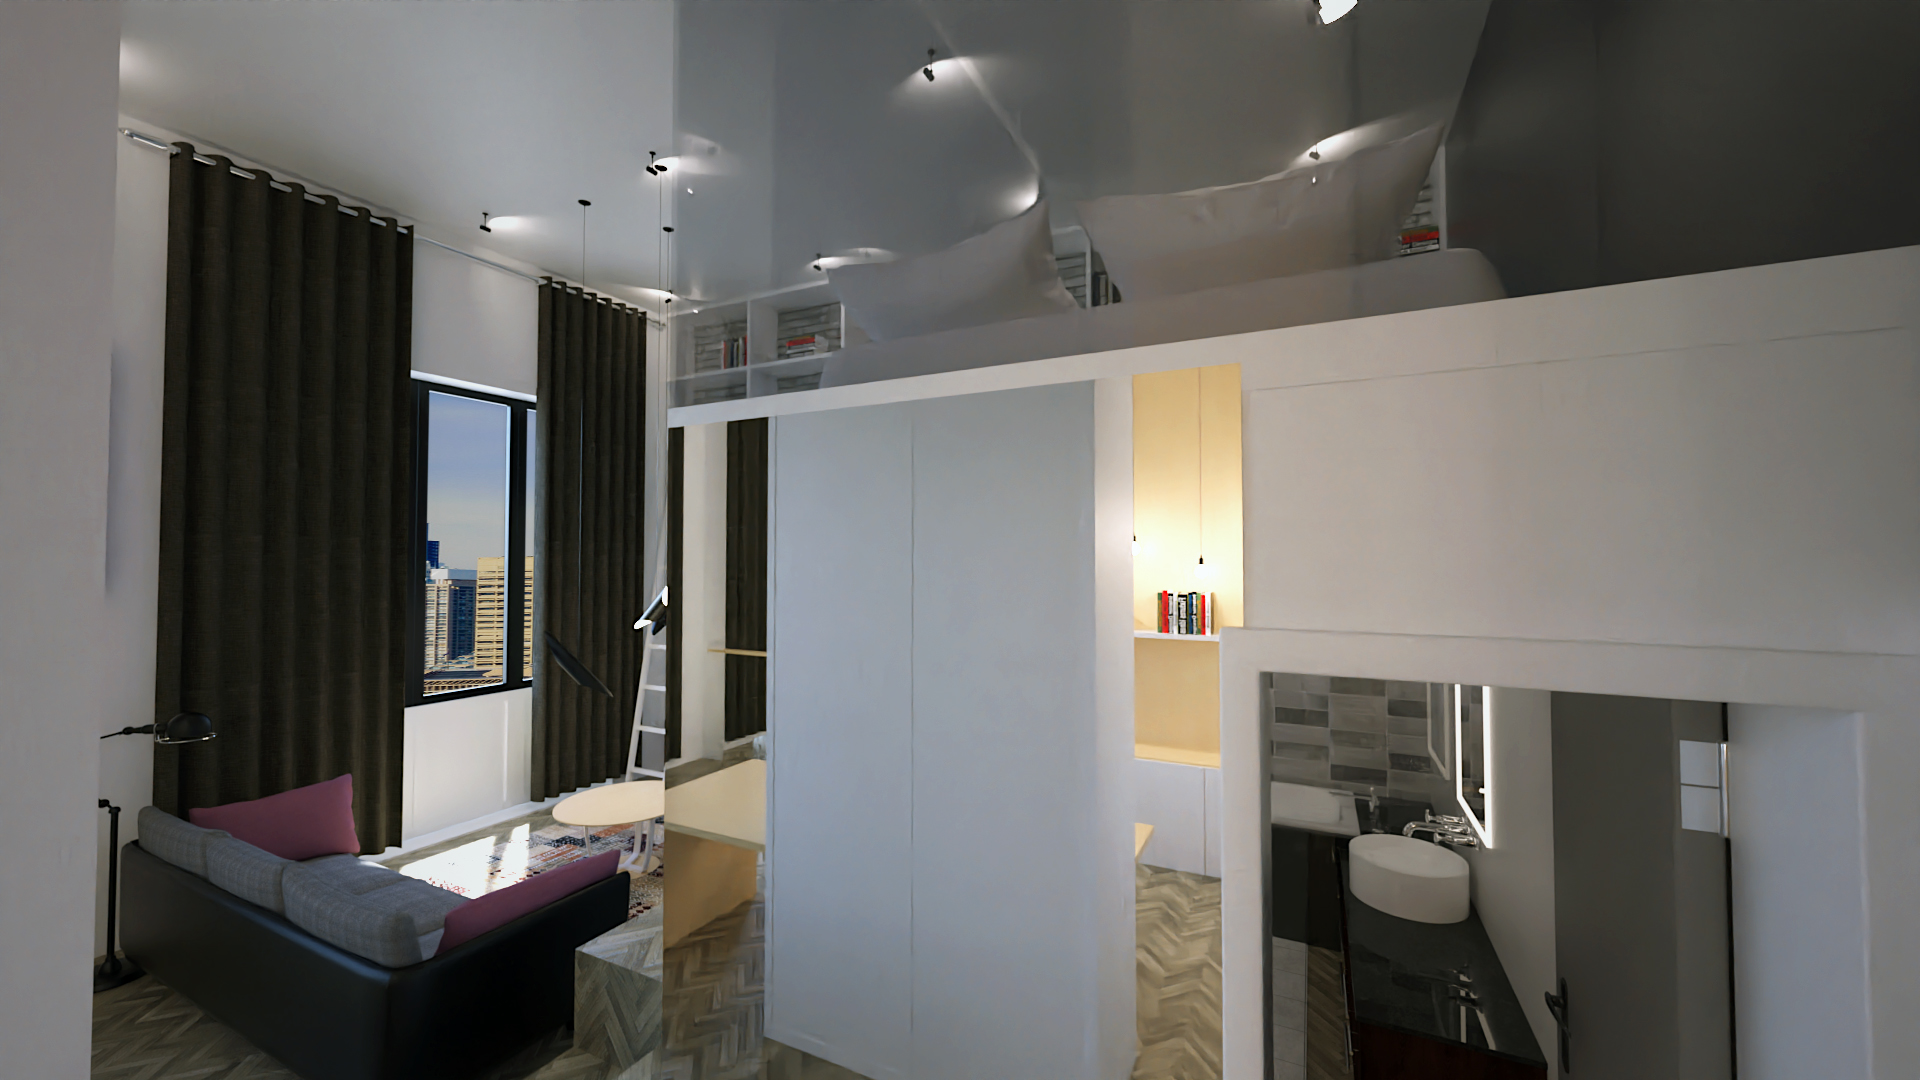 Studio Type Room 2 by: Tesla3dCorp, 3D Models by Daz 3D